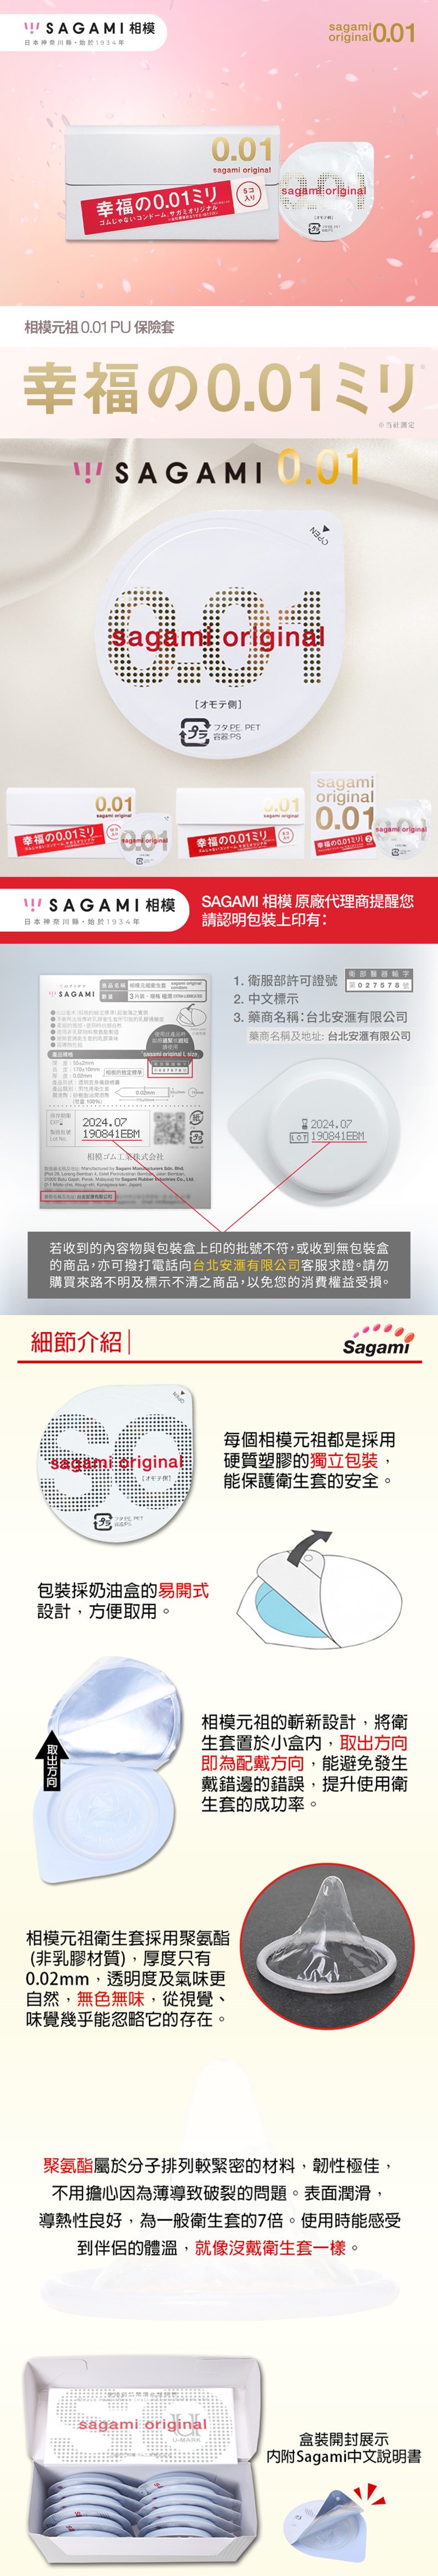 sagami 相模元祖 001 極致薄 55mm 保險套 2入裝長條圖 800X800.jpg